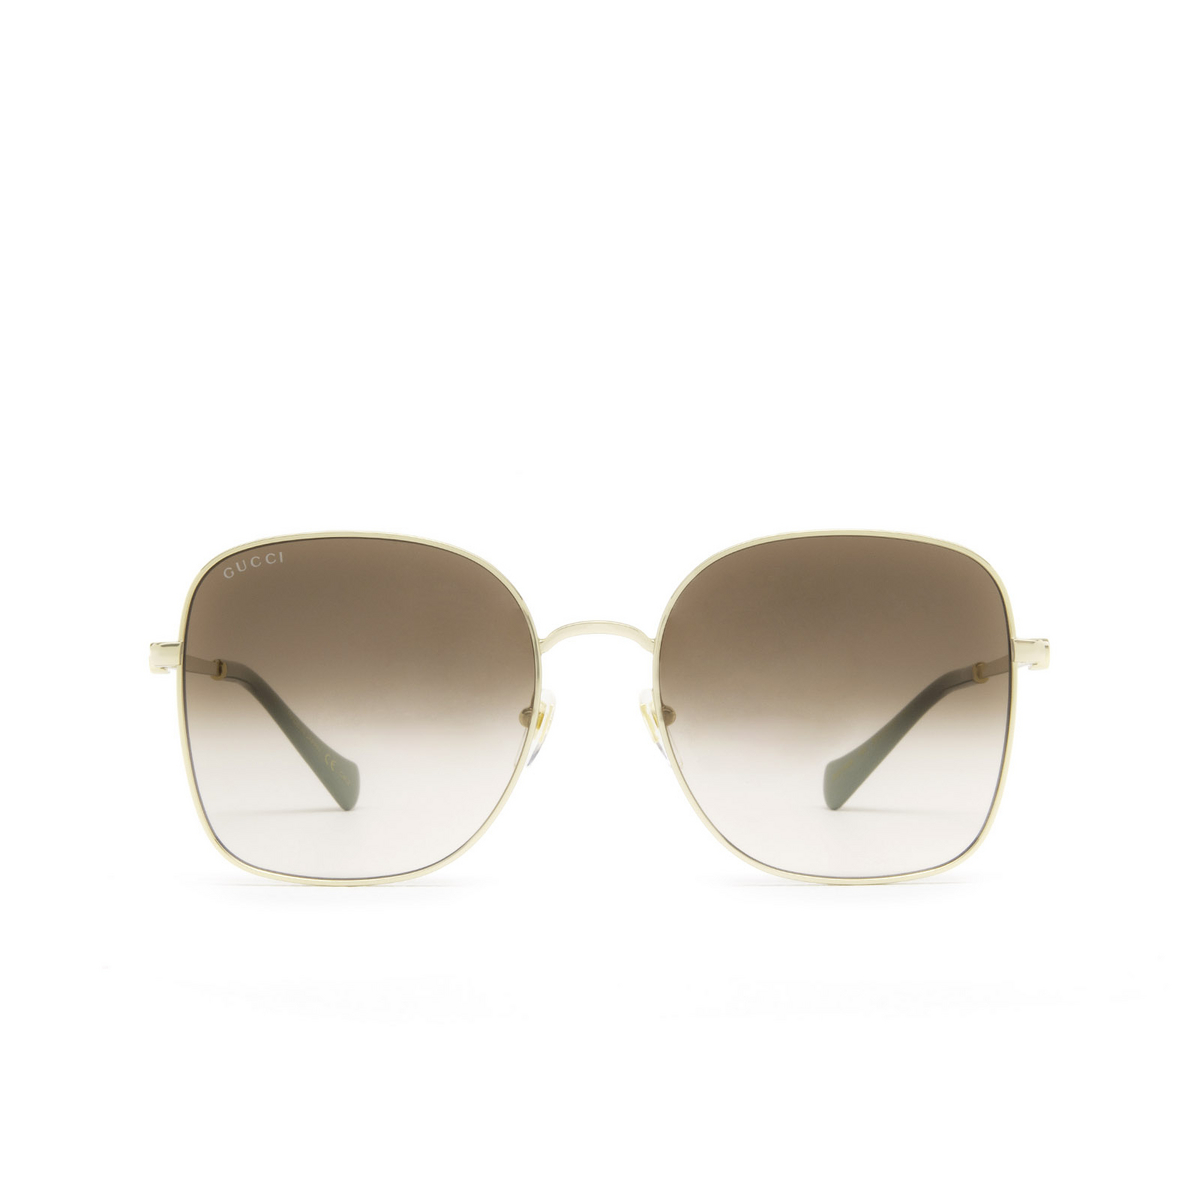 Gucci® Square Sunglasses: GG1143S color Gold 002 - front view.